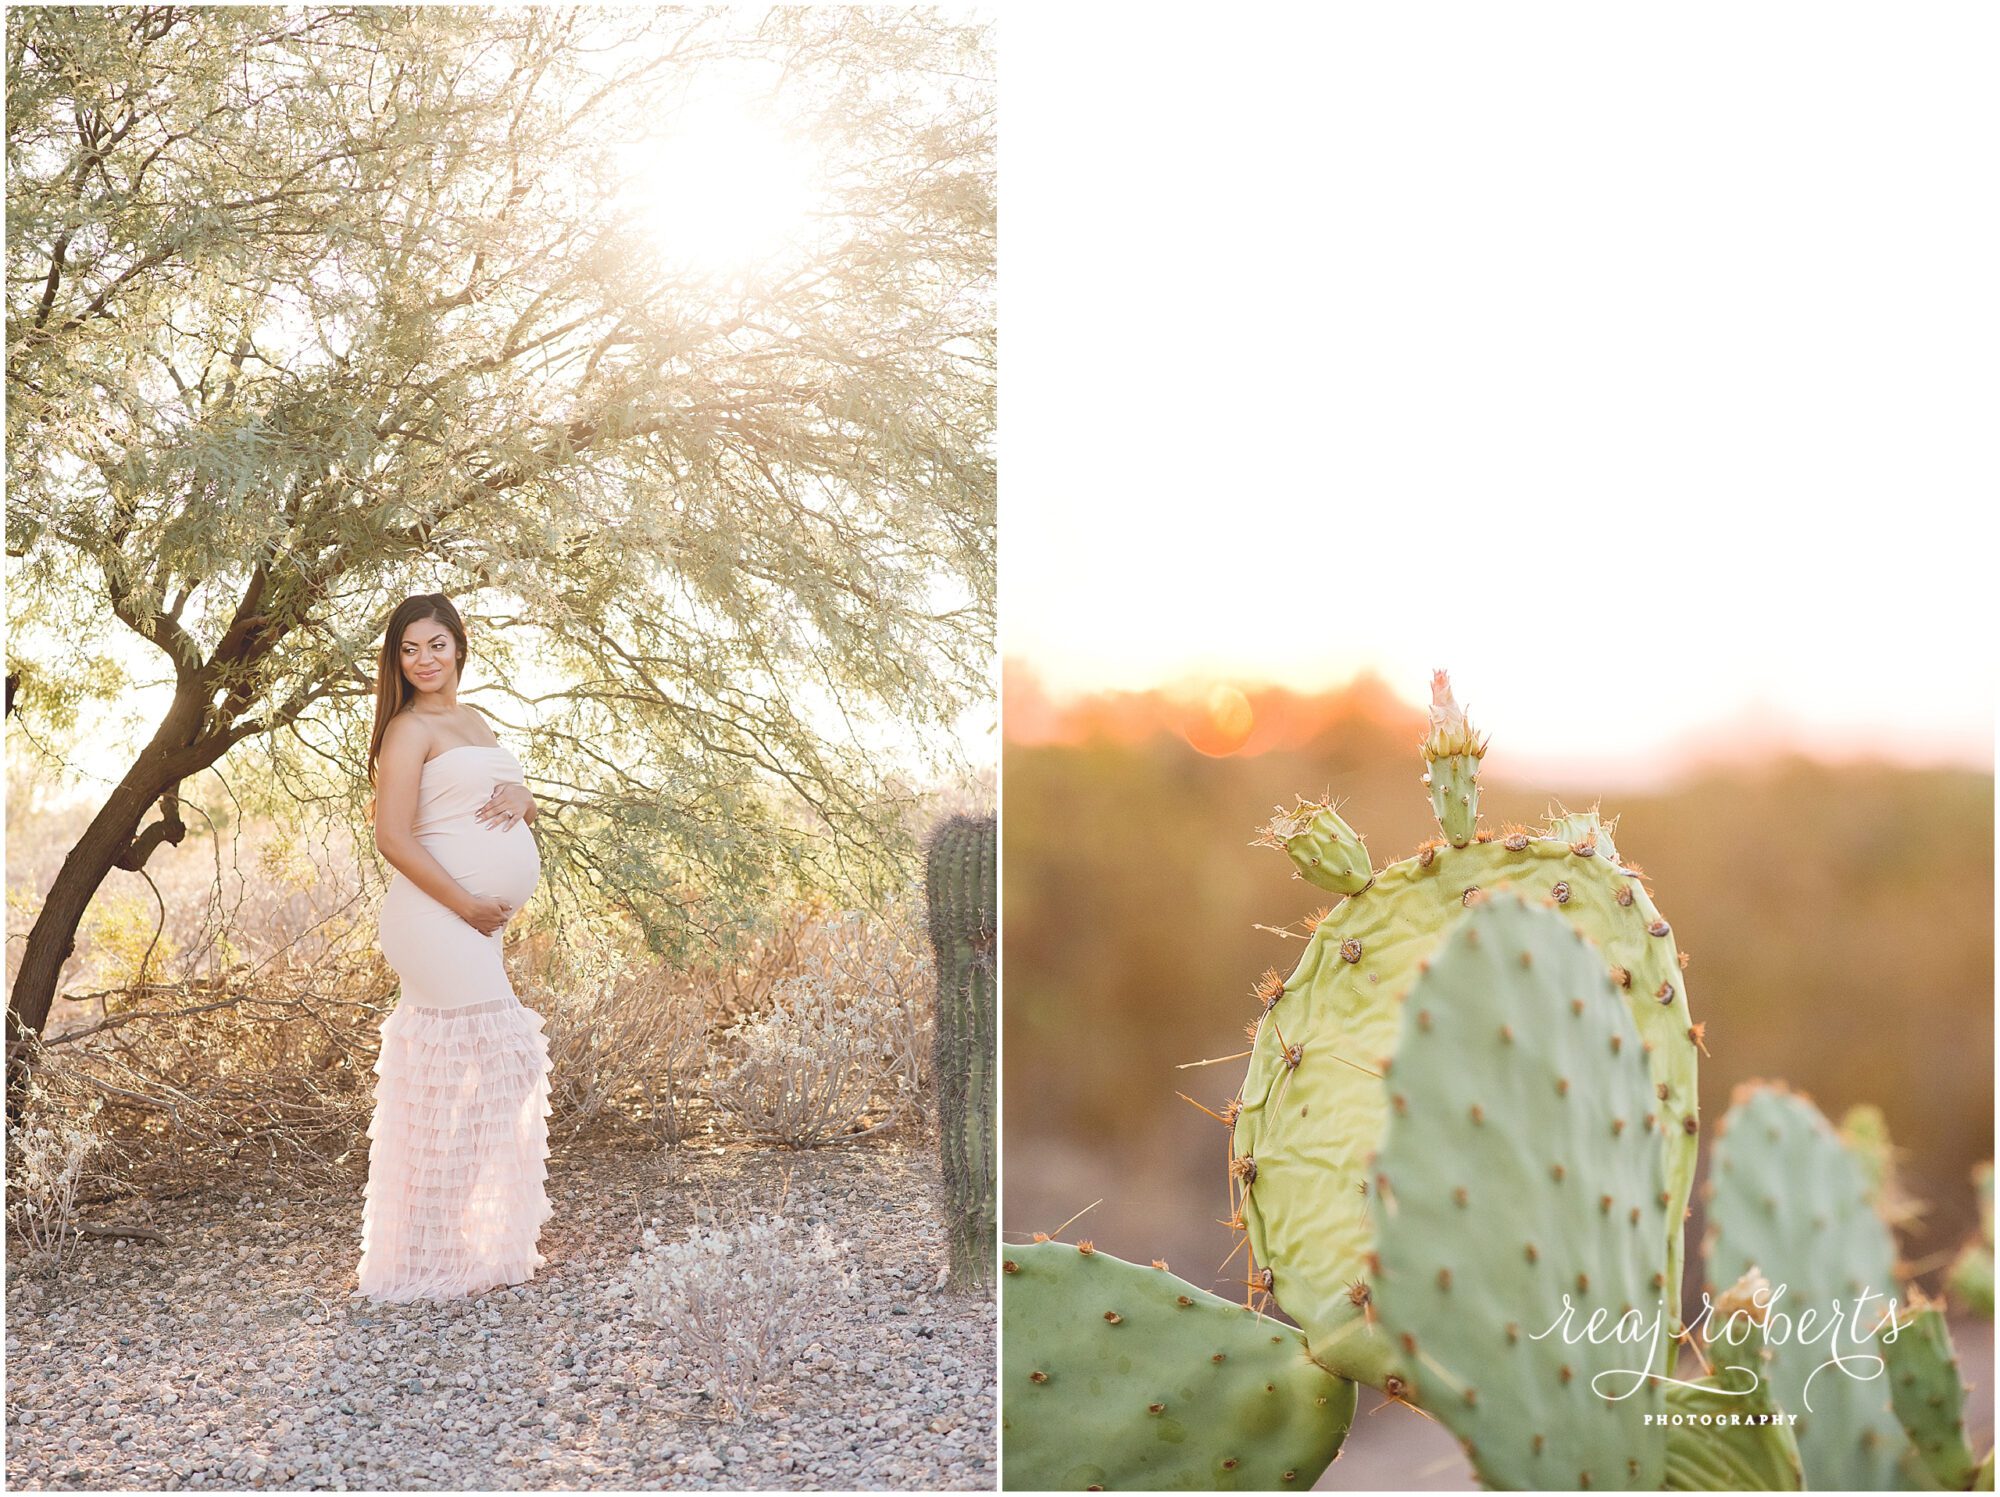 Desert botanical maternity session | Reaj Roberts Photography